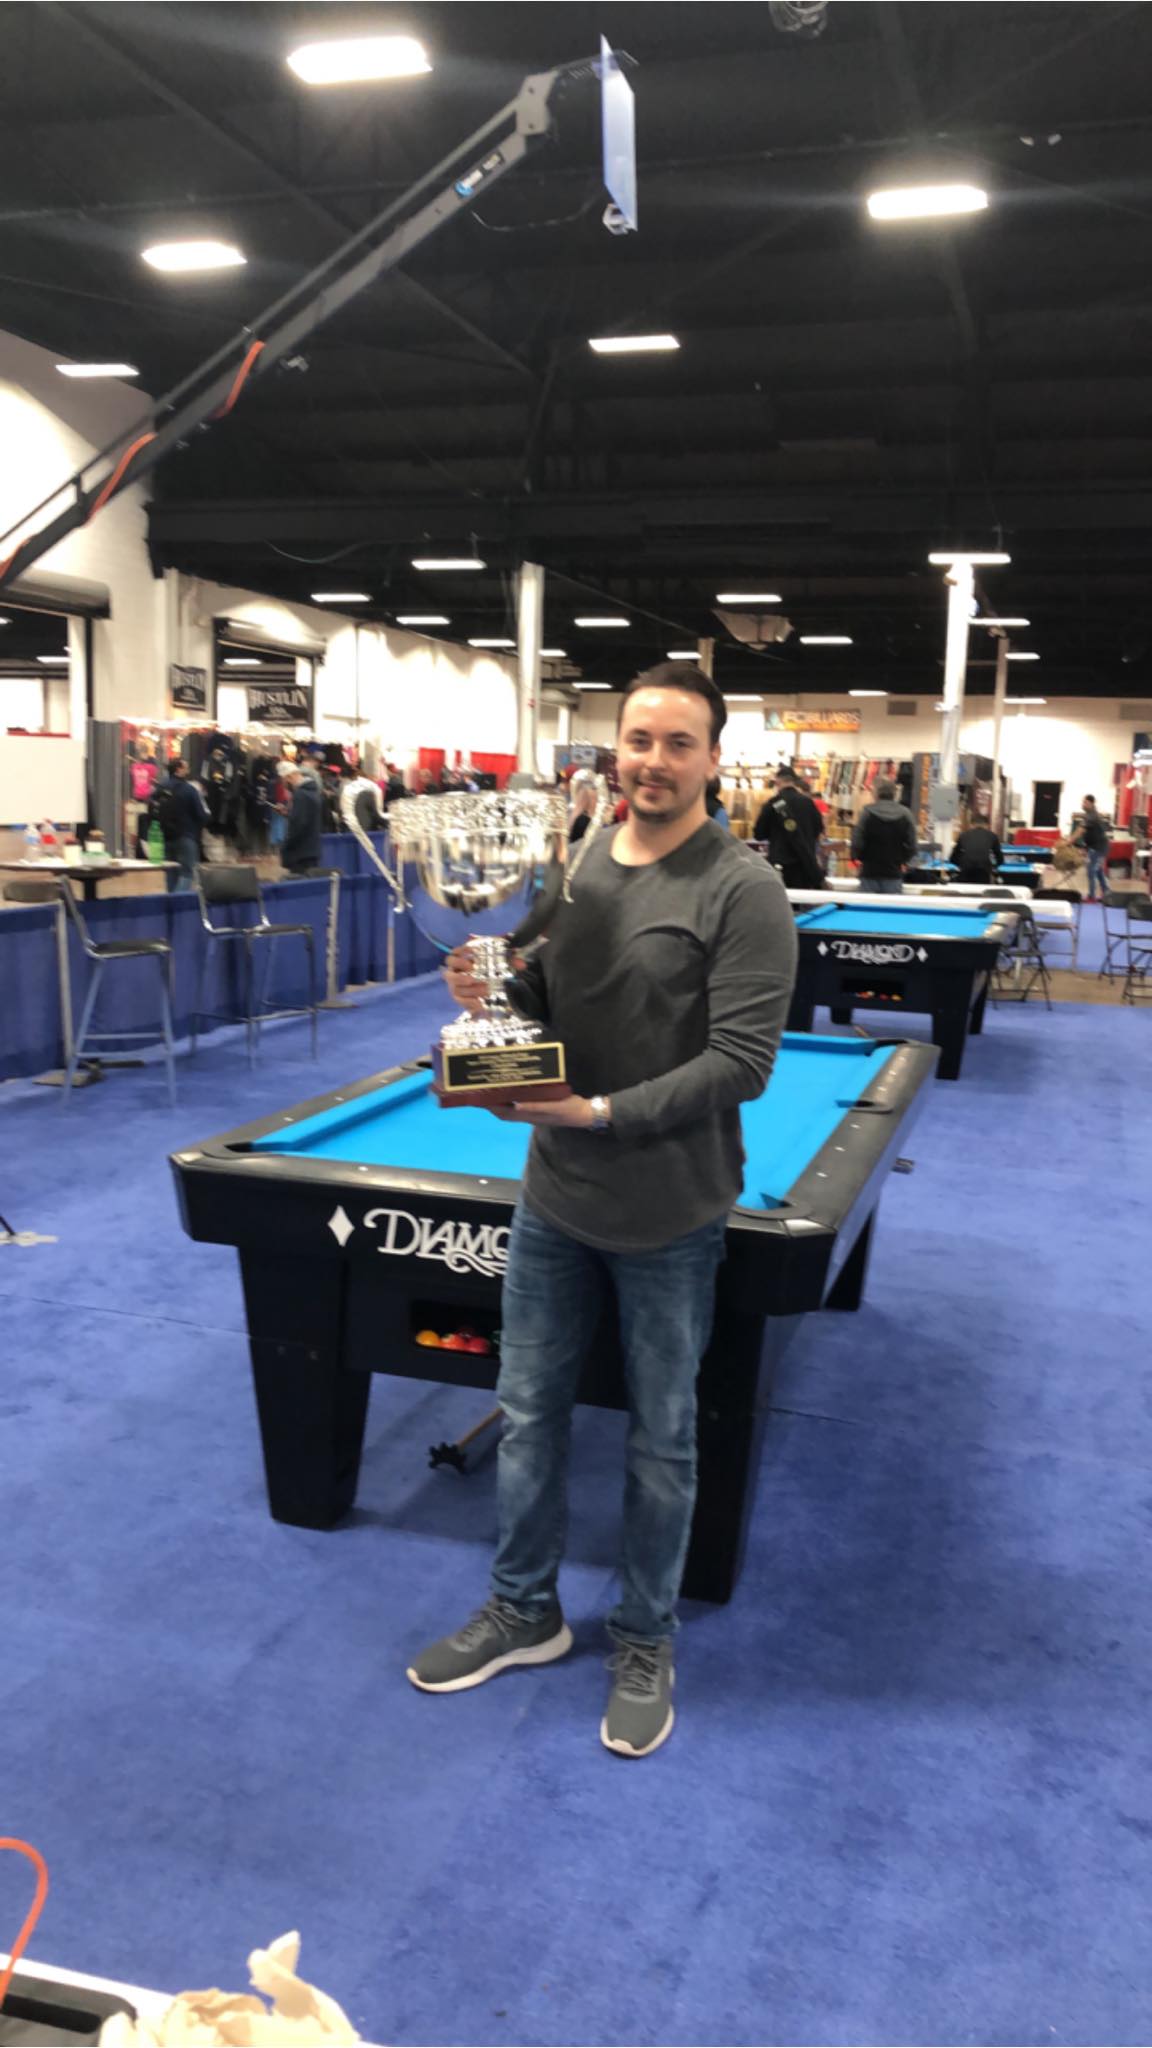 Phil Davis wins 2019 Super Billiards Expo